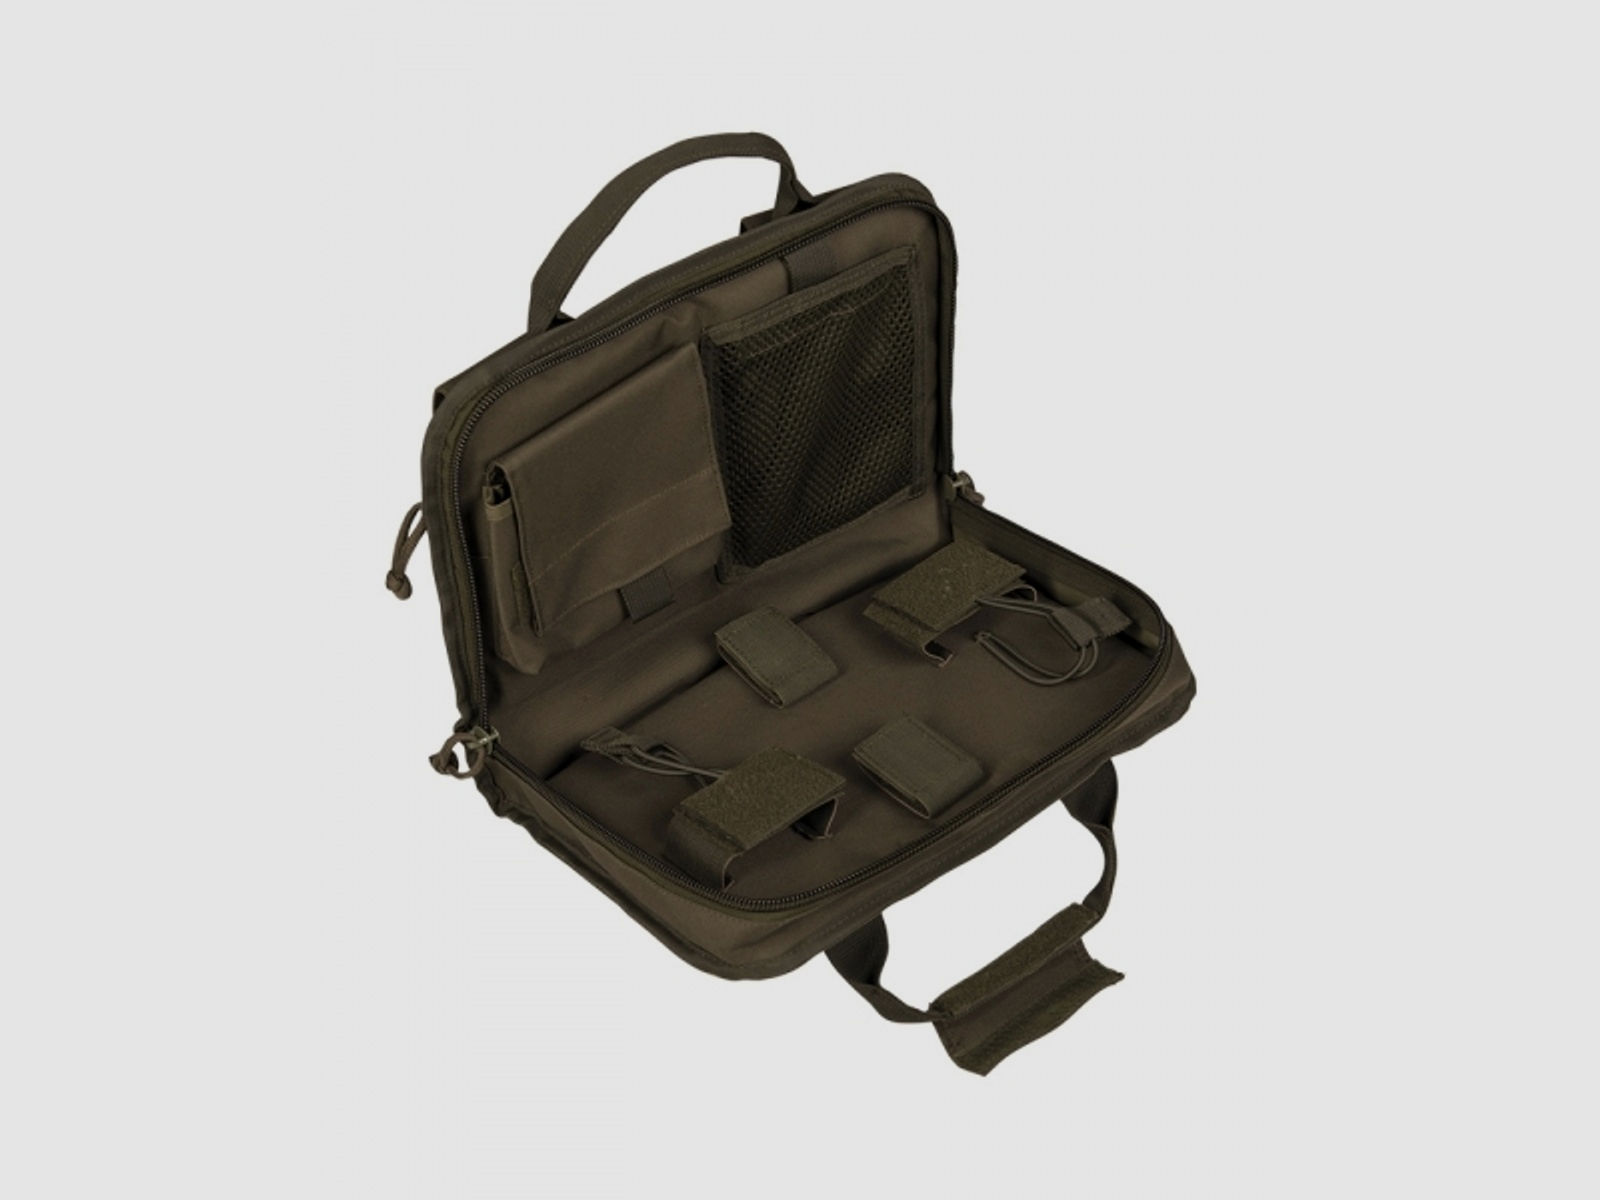 Tactical Pistolentasche Oliv SMALL (34cm)- gefüttert  Pistol Case Transport Waffentasche